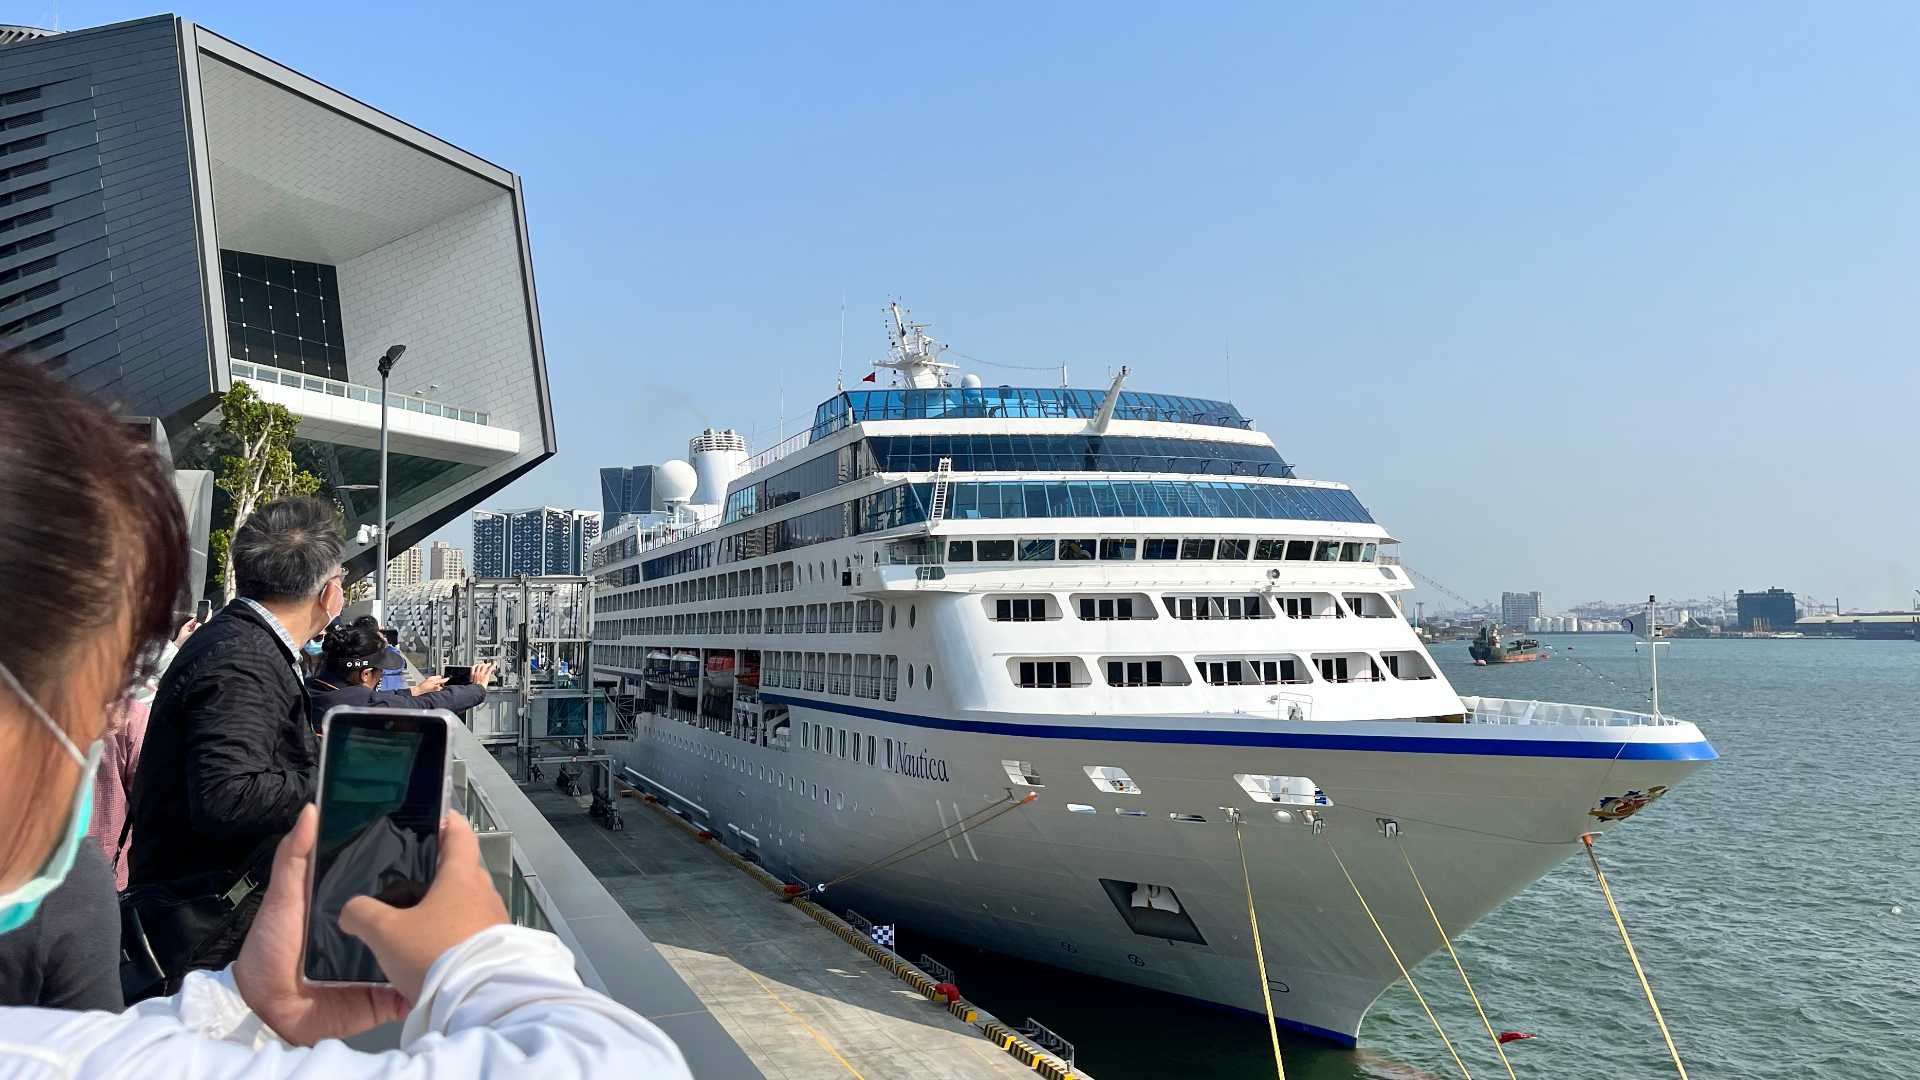 The Nautica cruise ship docked alongside the Kaohsiung Port Cruise Terminal.